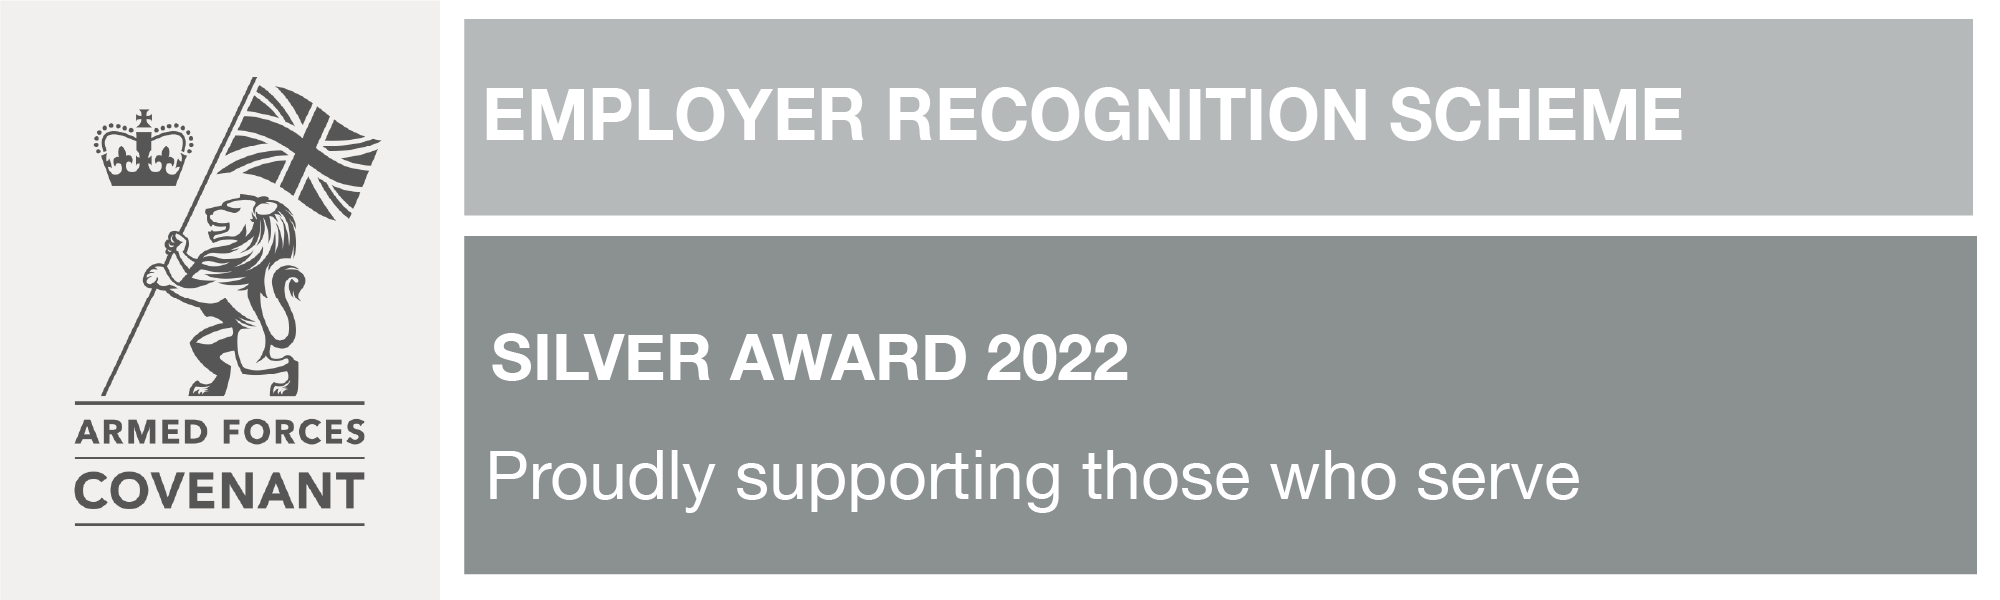 Employer Recognition Scheme Silver Award 2022